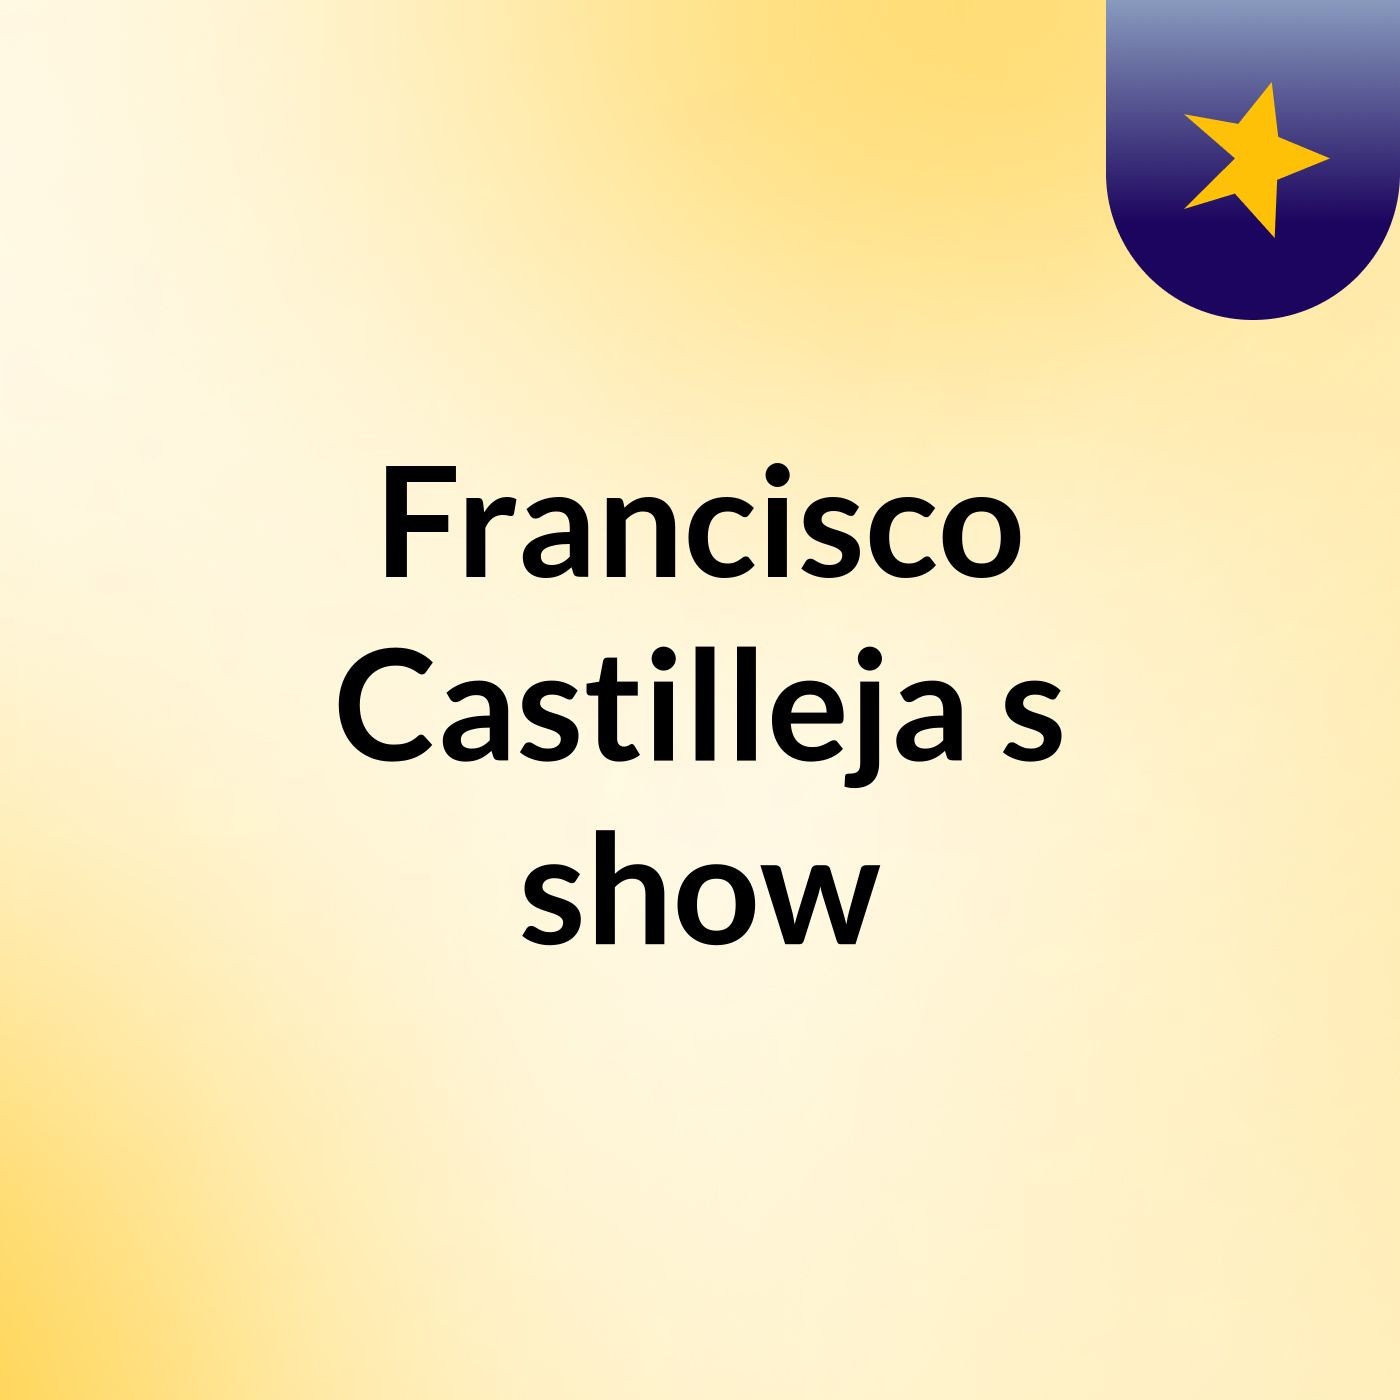 Francisco Castilleja's show